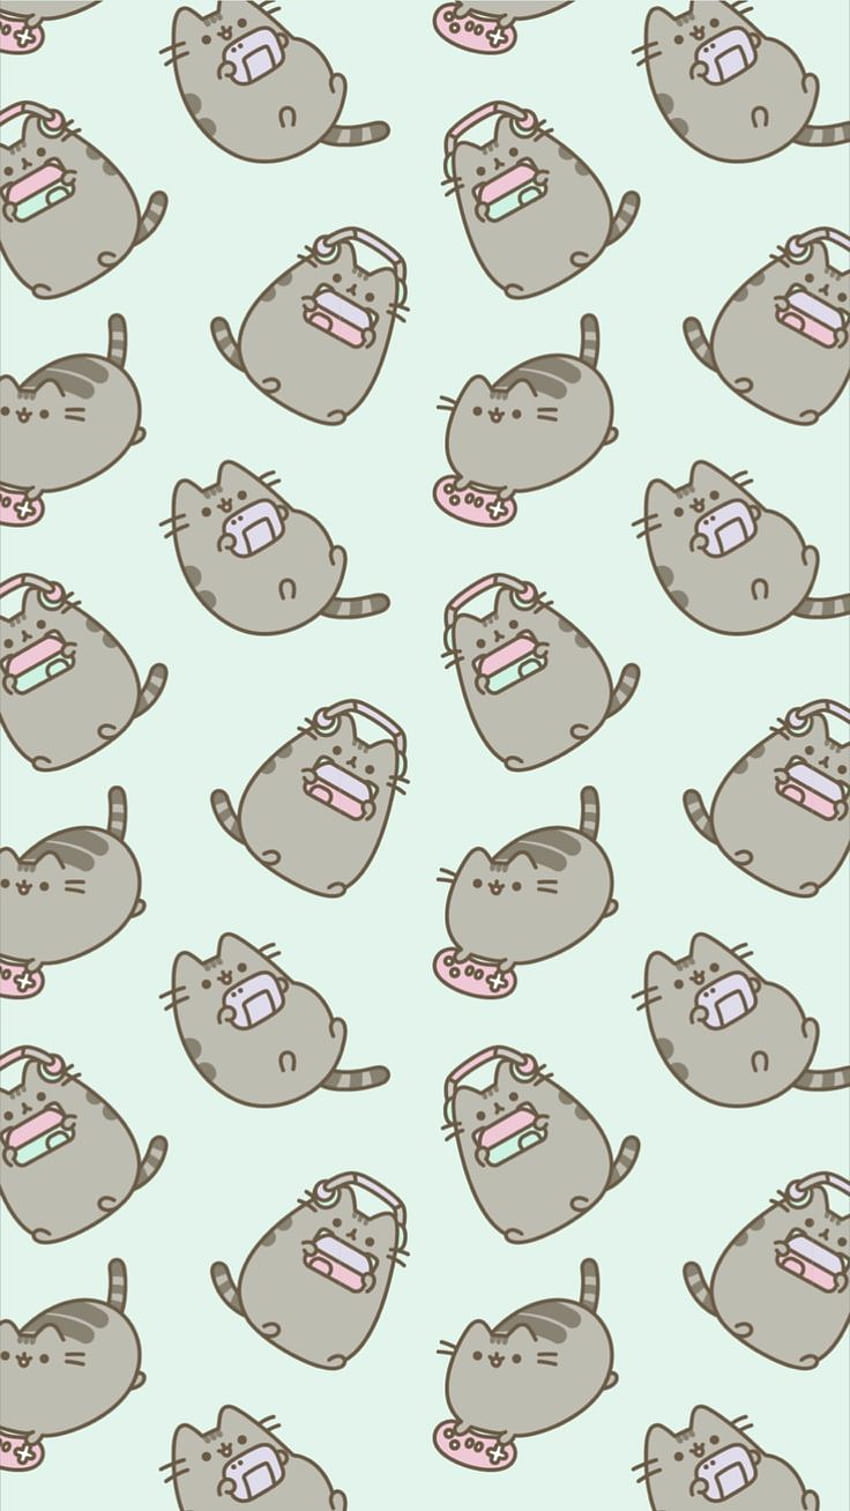 Pusheen the cat iphone background プッシーン ゲーマー キティ。 Pusheen かわいい、Pusheen、猫、GaMERCaT HD電話の壁紙